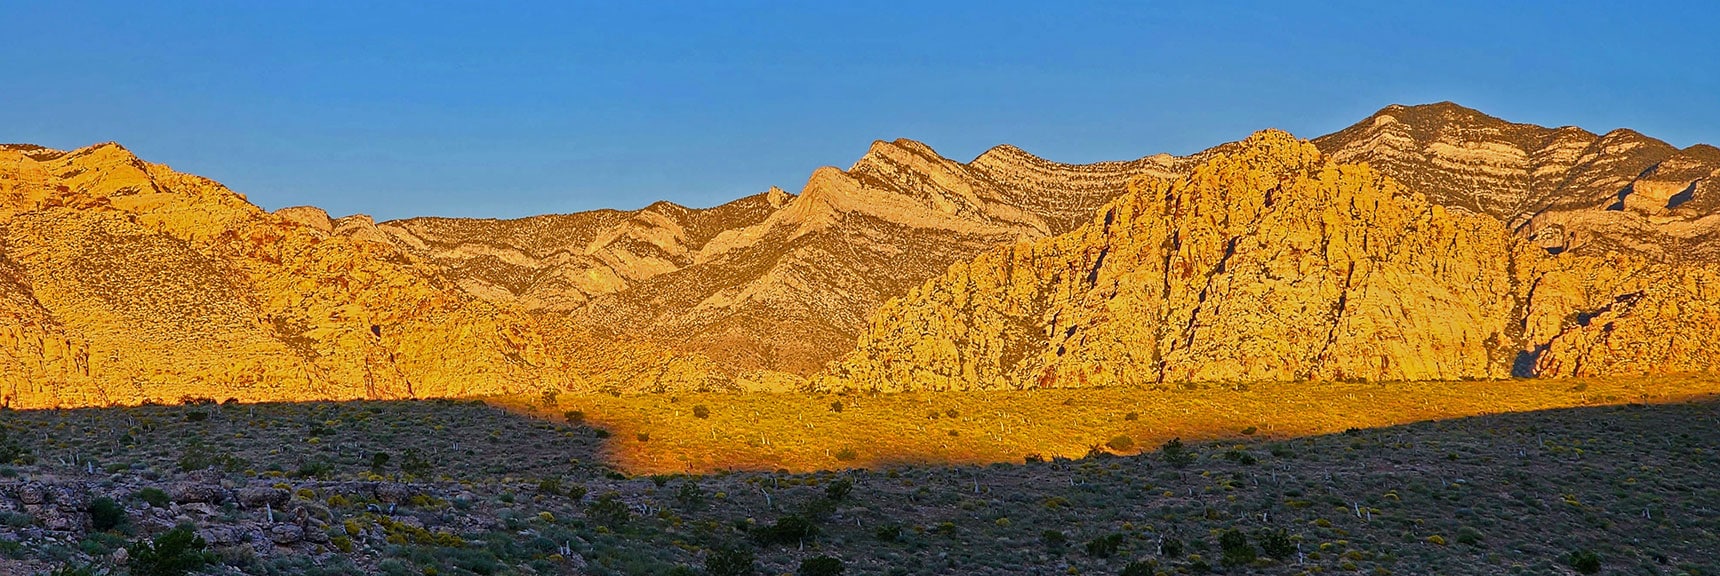 La Madre Mts. Ridgeline Behind White Rock Mt. and Rainbow Mts. Ridgeline | Switchback Spring Ridge | Red Rock Canyon, Nevada